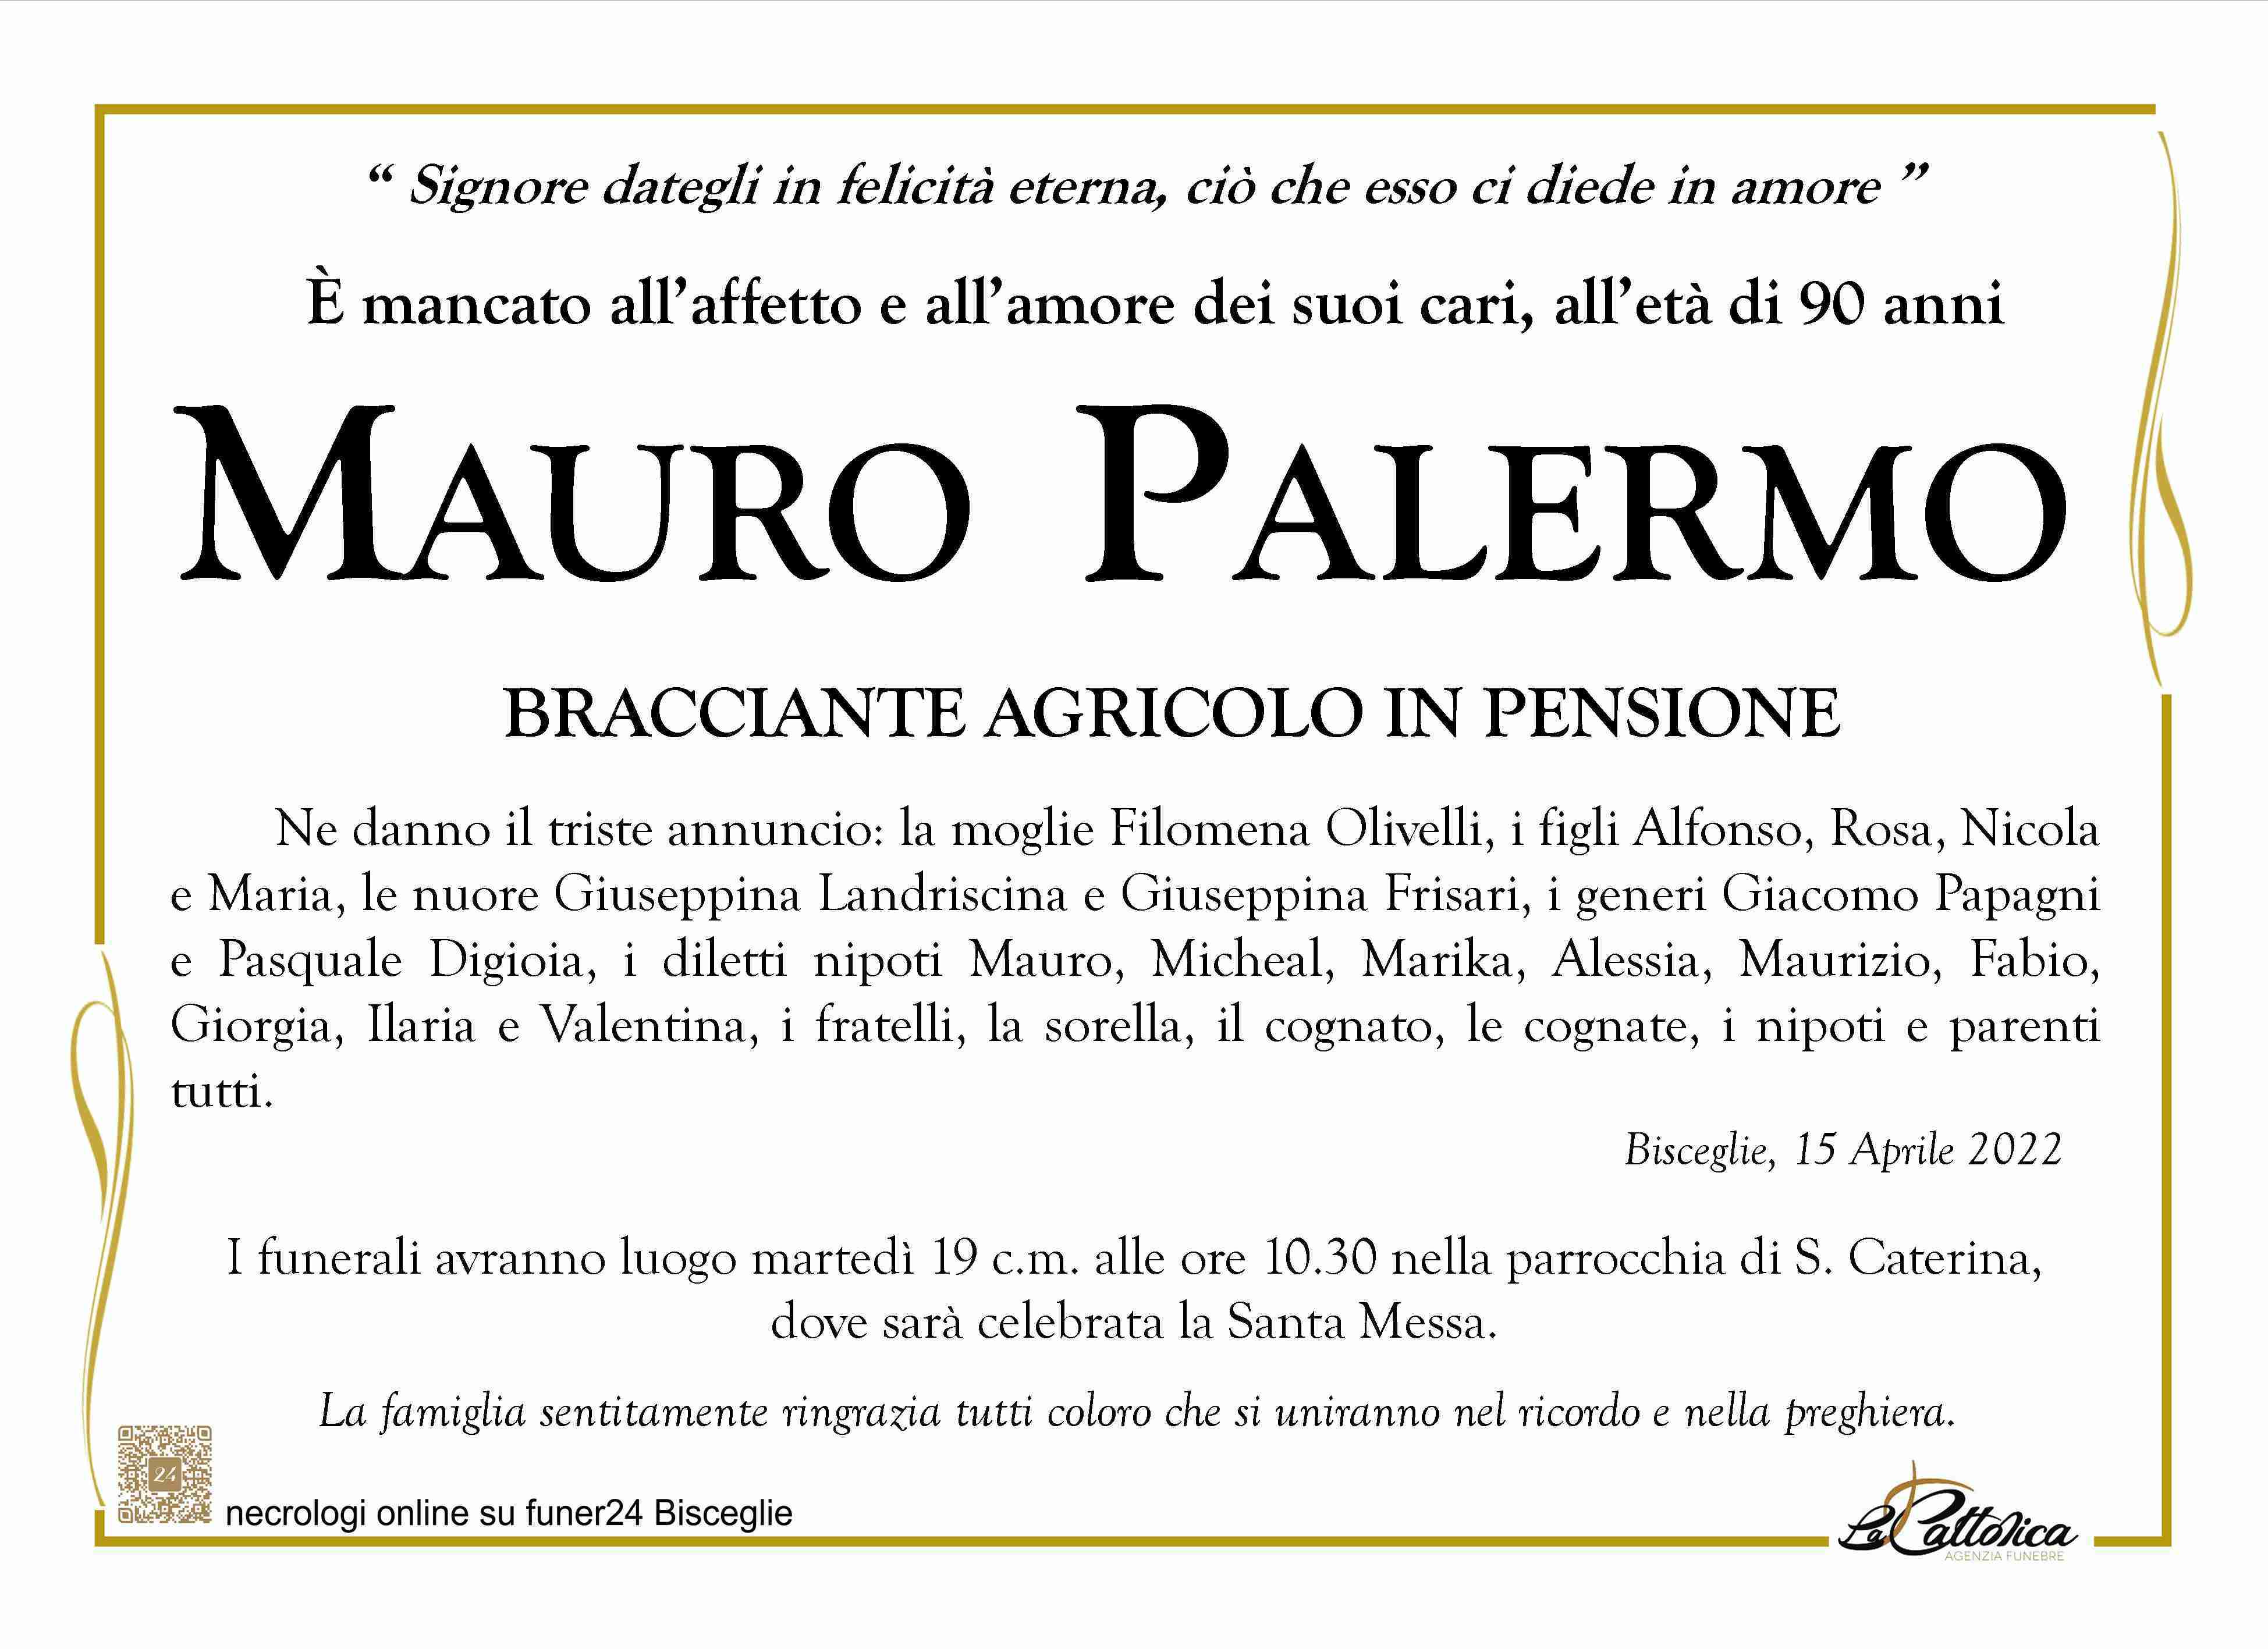 Mauro Palermo